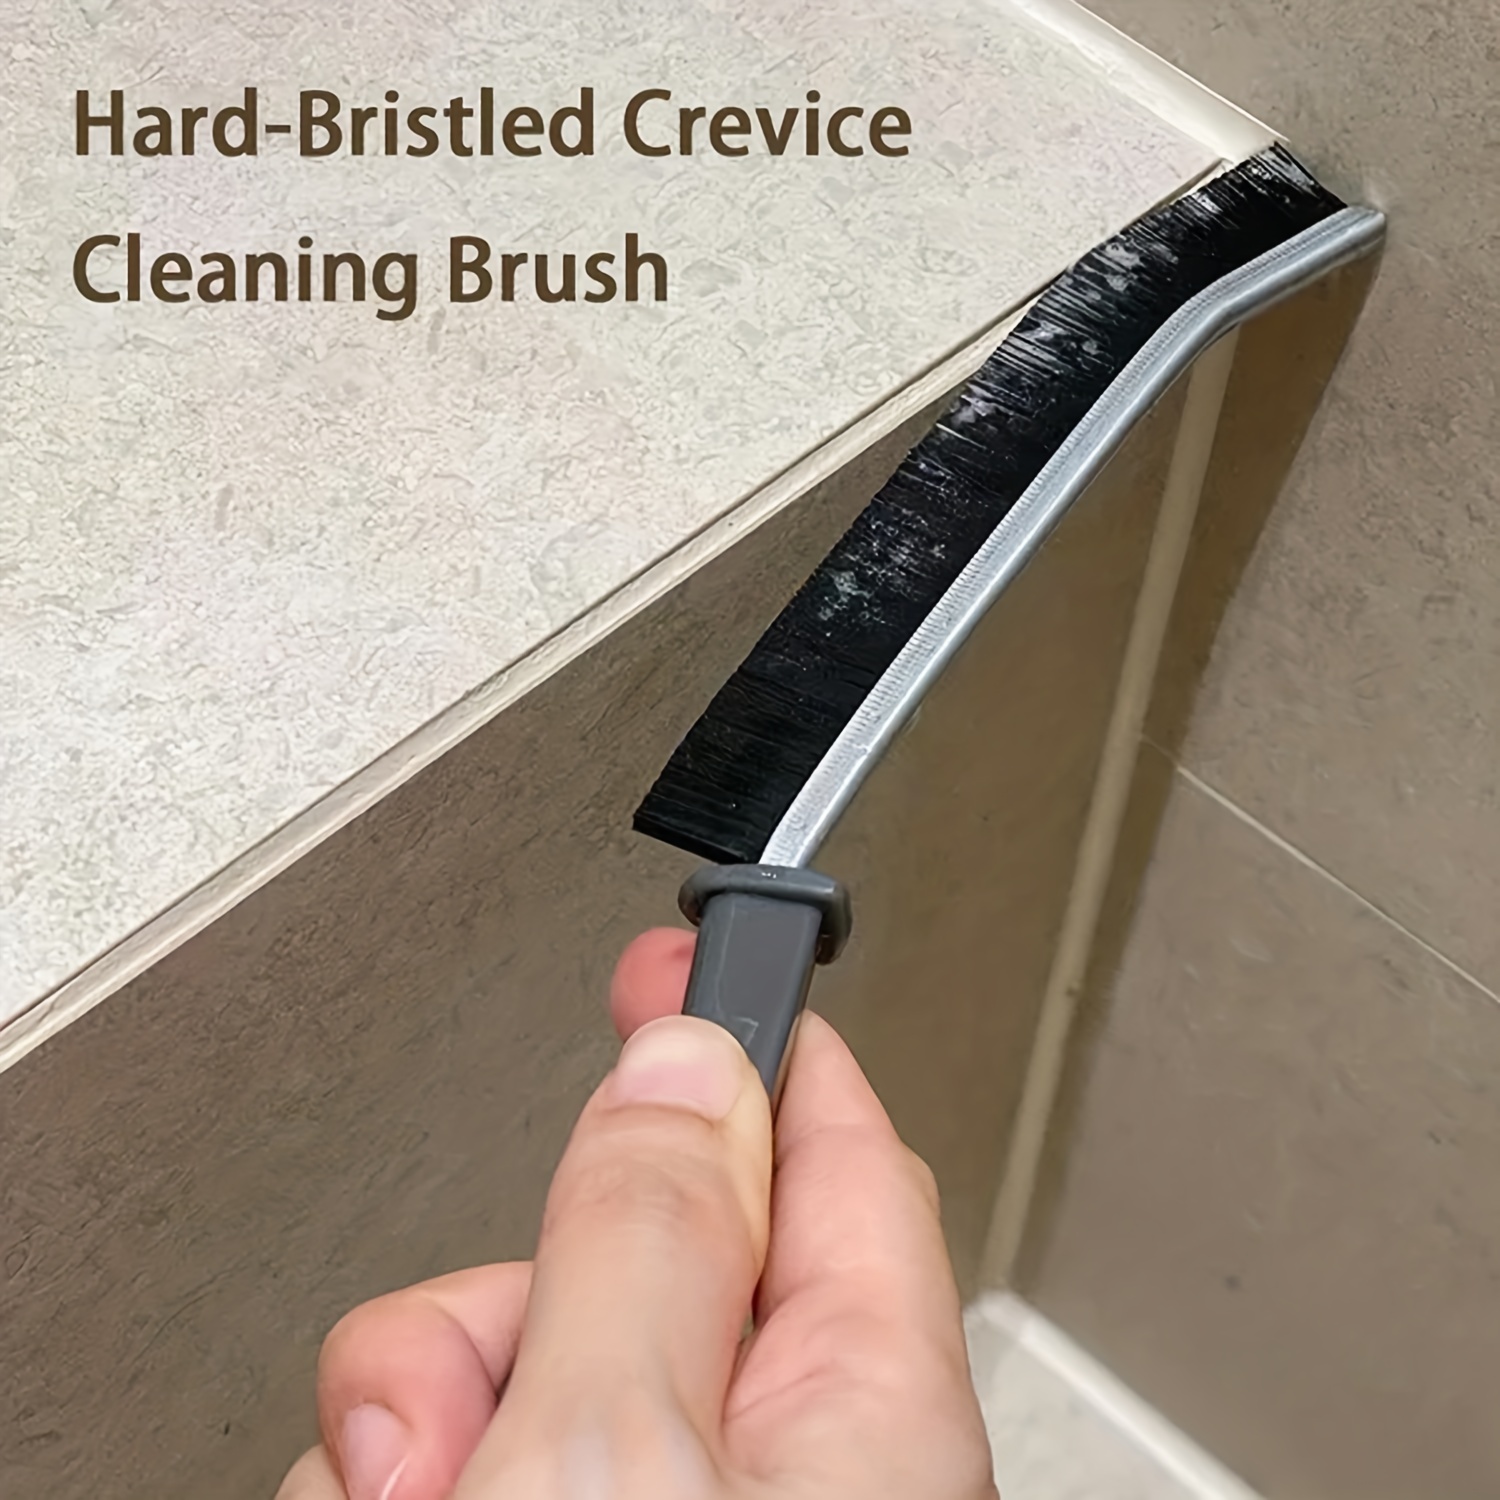 Hard-Bristled Crevice Cleaning Brush Prime, Hard bristles Crevice